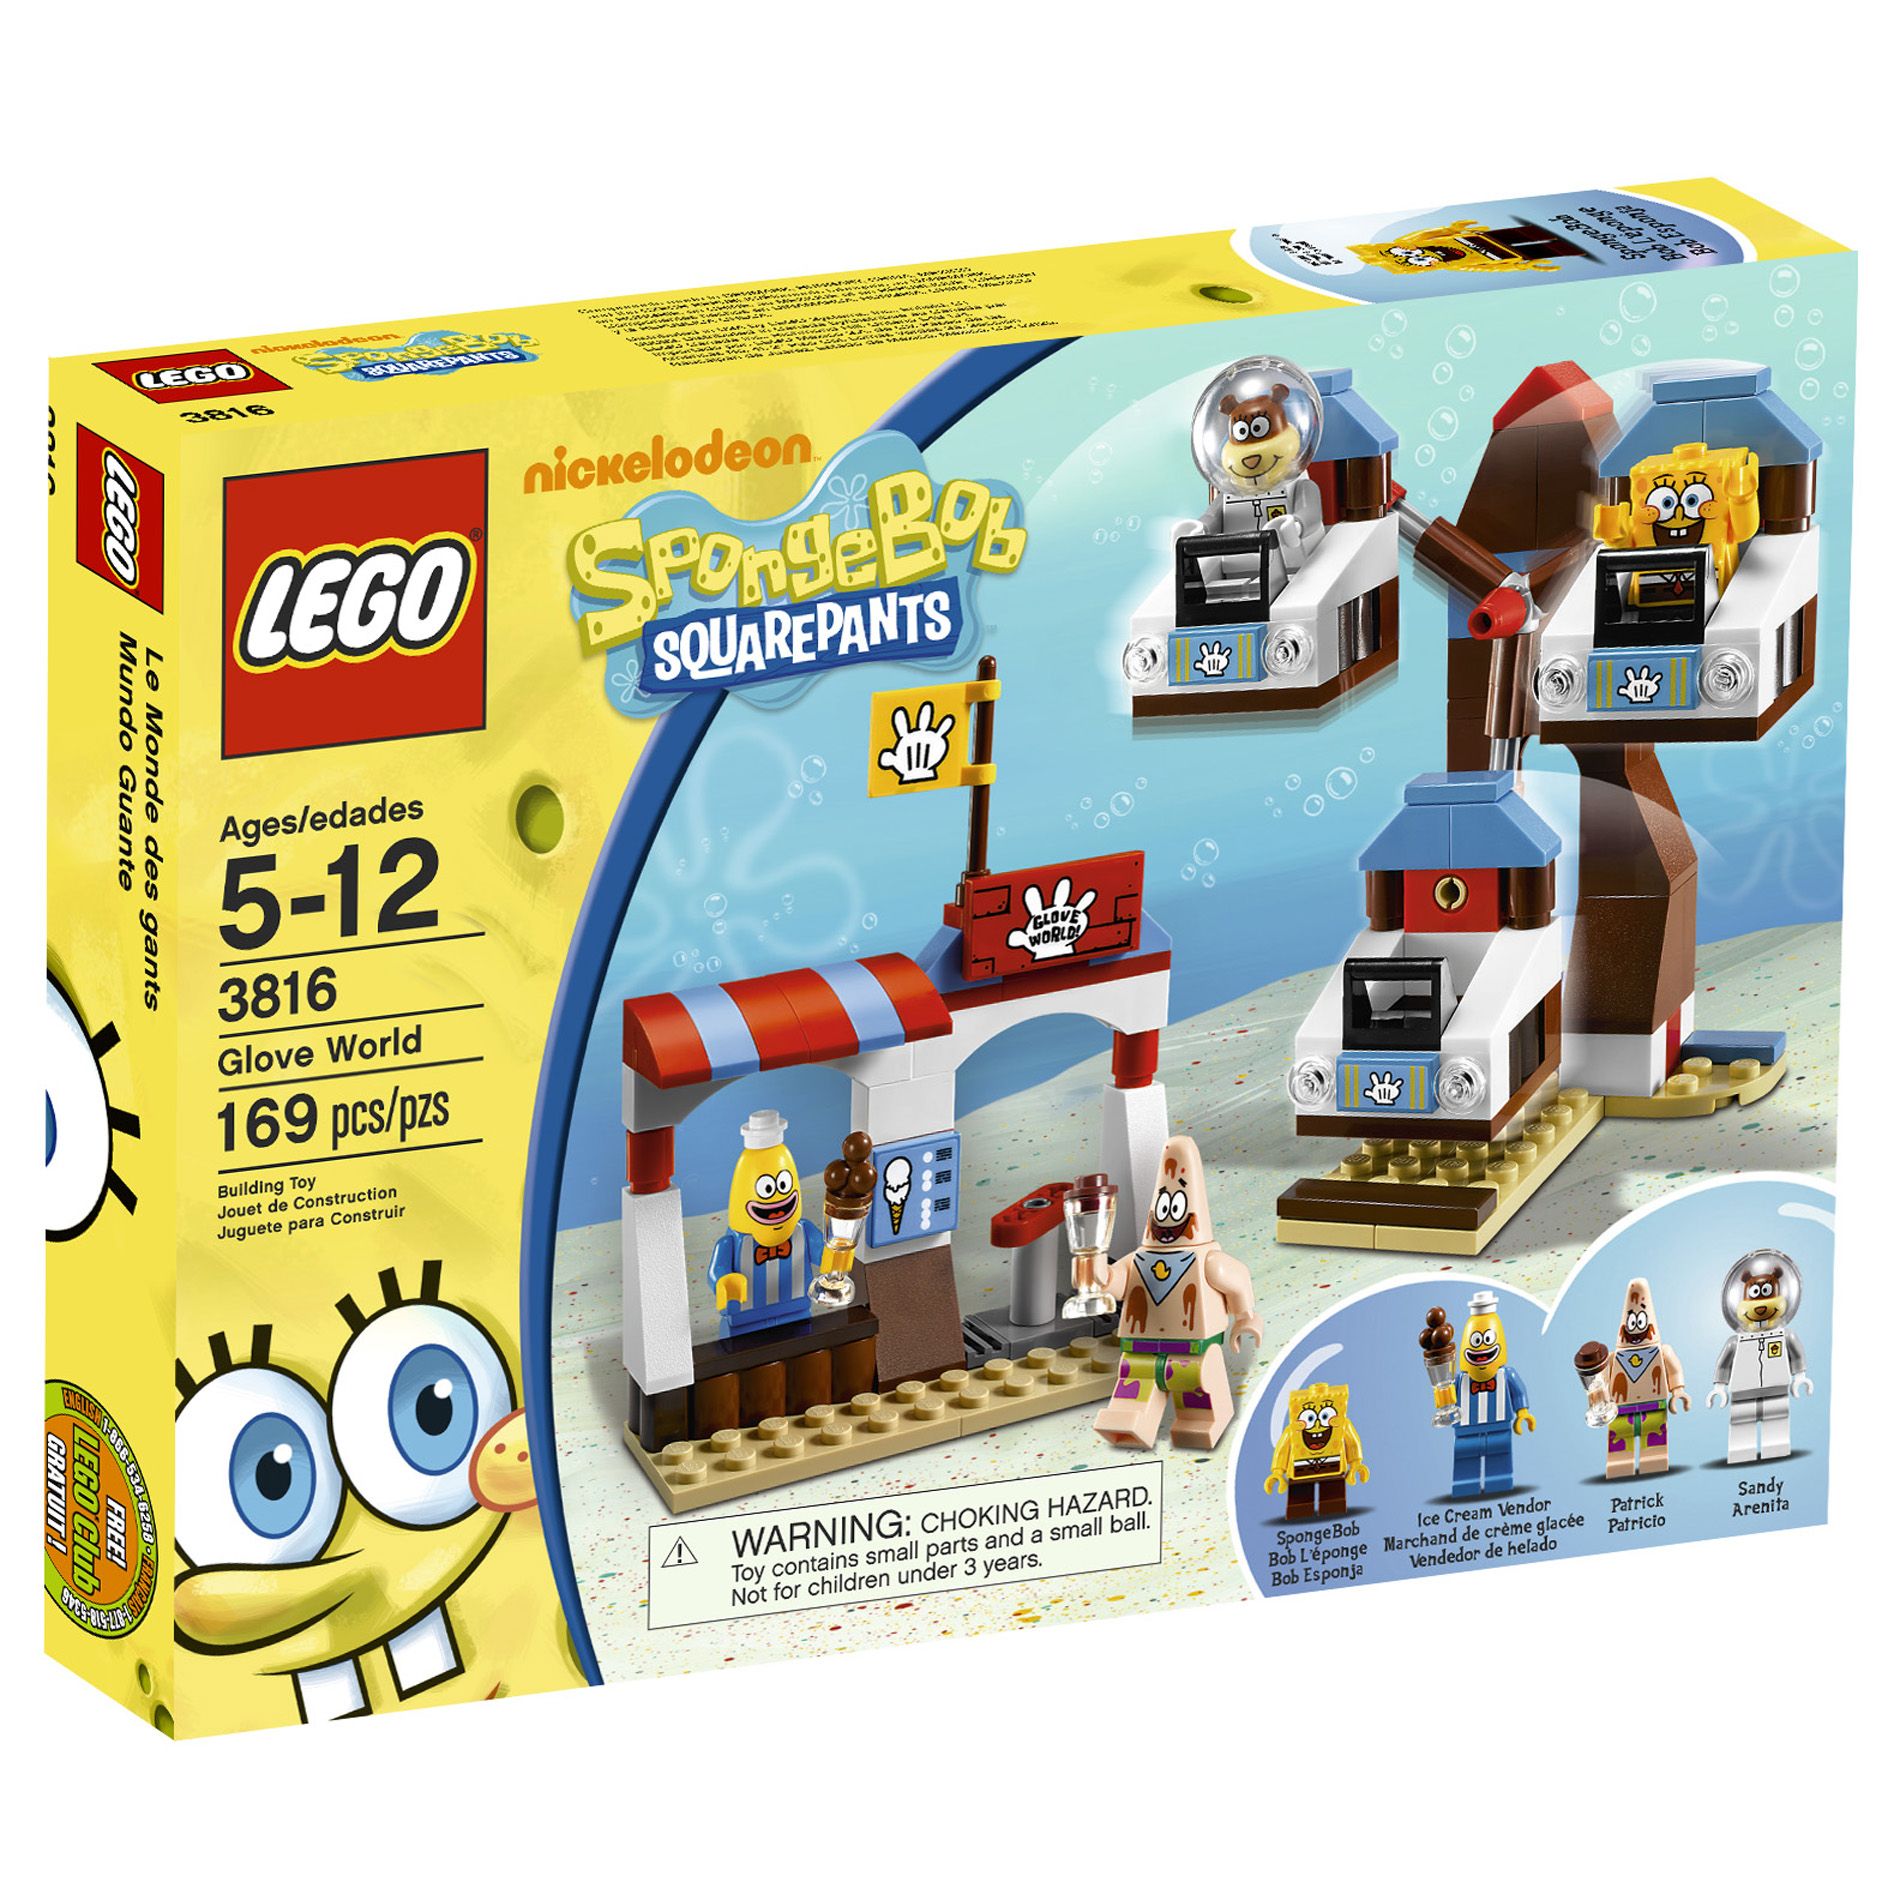 Demon Play Reskyd permeabilitet LEGO SpongeBob SquarePants™ Glove World #3816